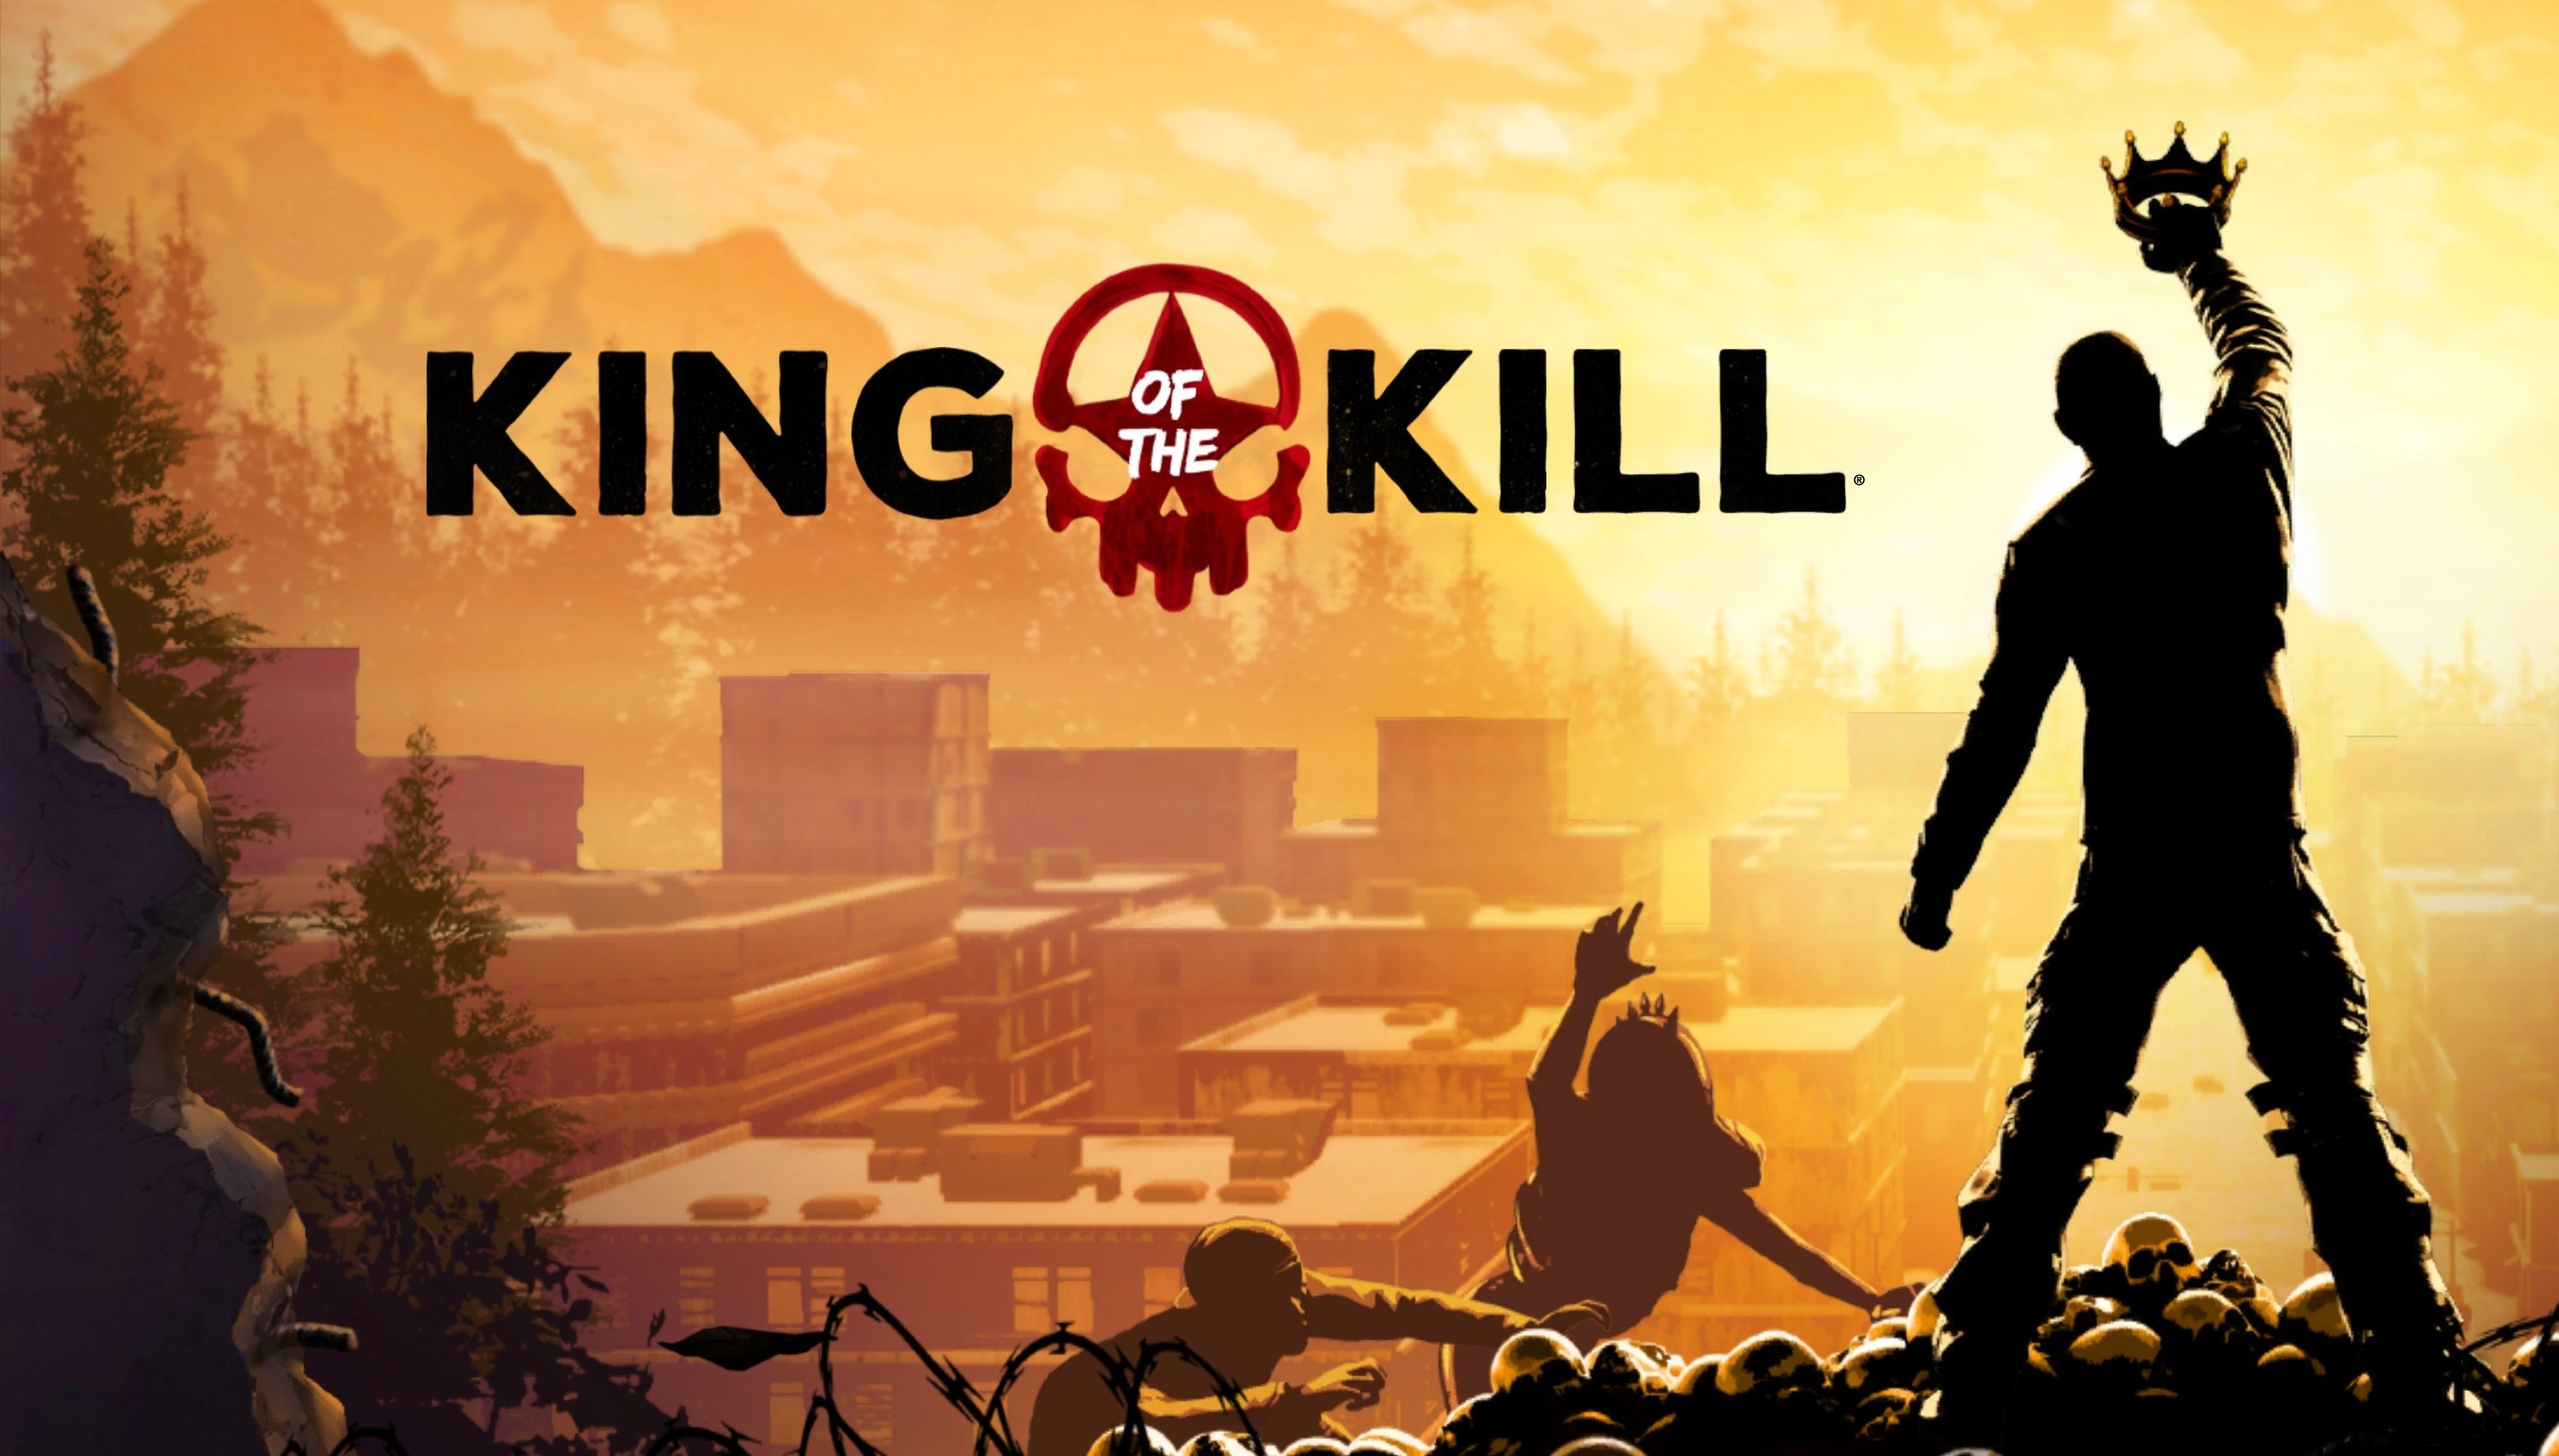 H1z1 King Of The Kill Wallpaper Image